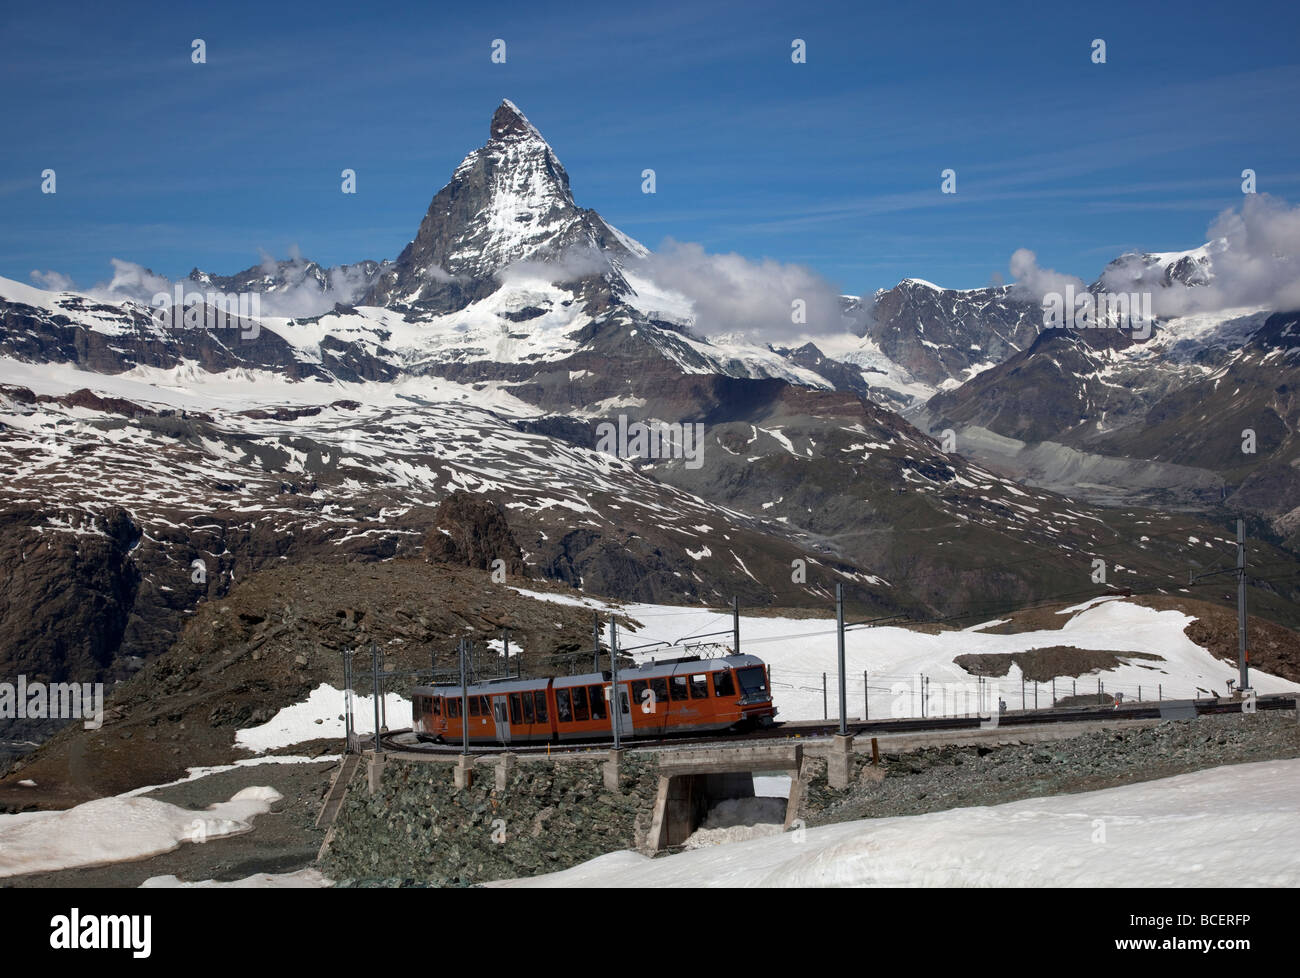 View Matterhorn mountain with the famous Gornergrat Bahn Matterhorn railway in foreground, Zermatt, Switzerland, Europe Stock Photo